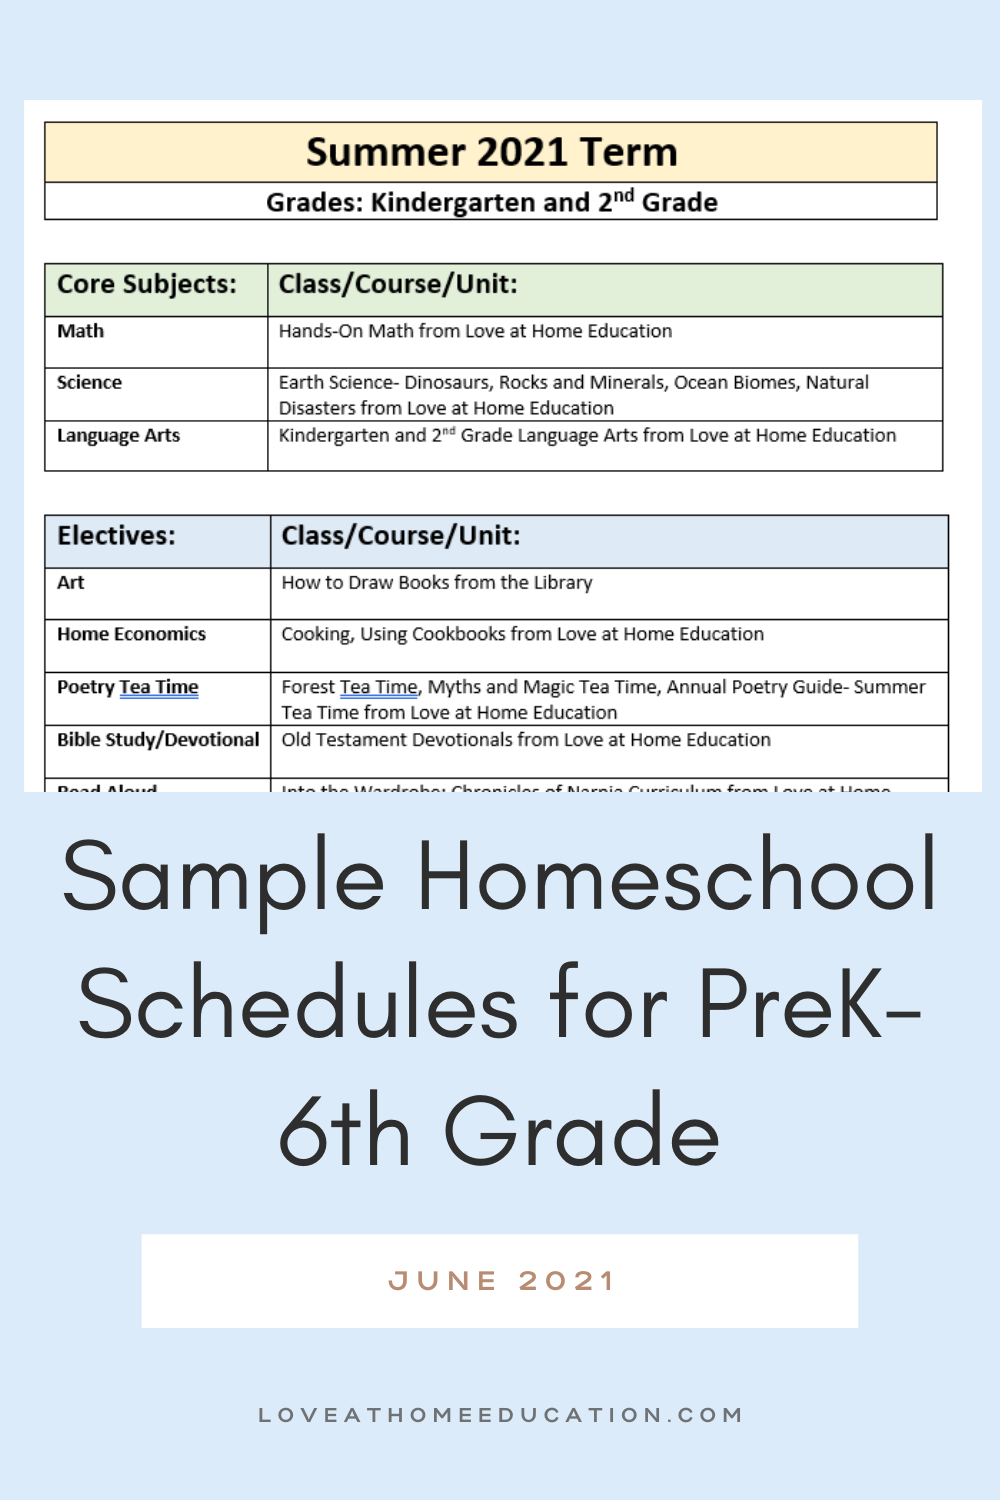 Sample Homeschool Schedules for Preschool-6th Grade